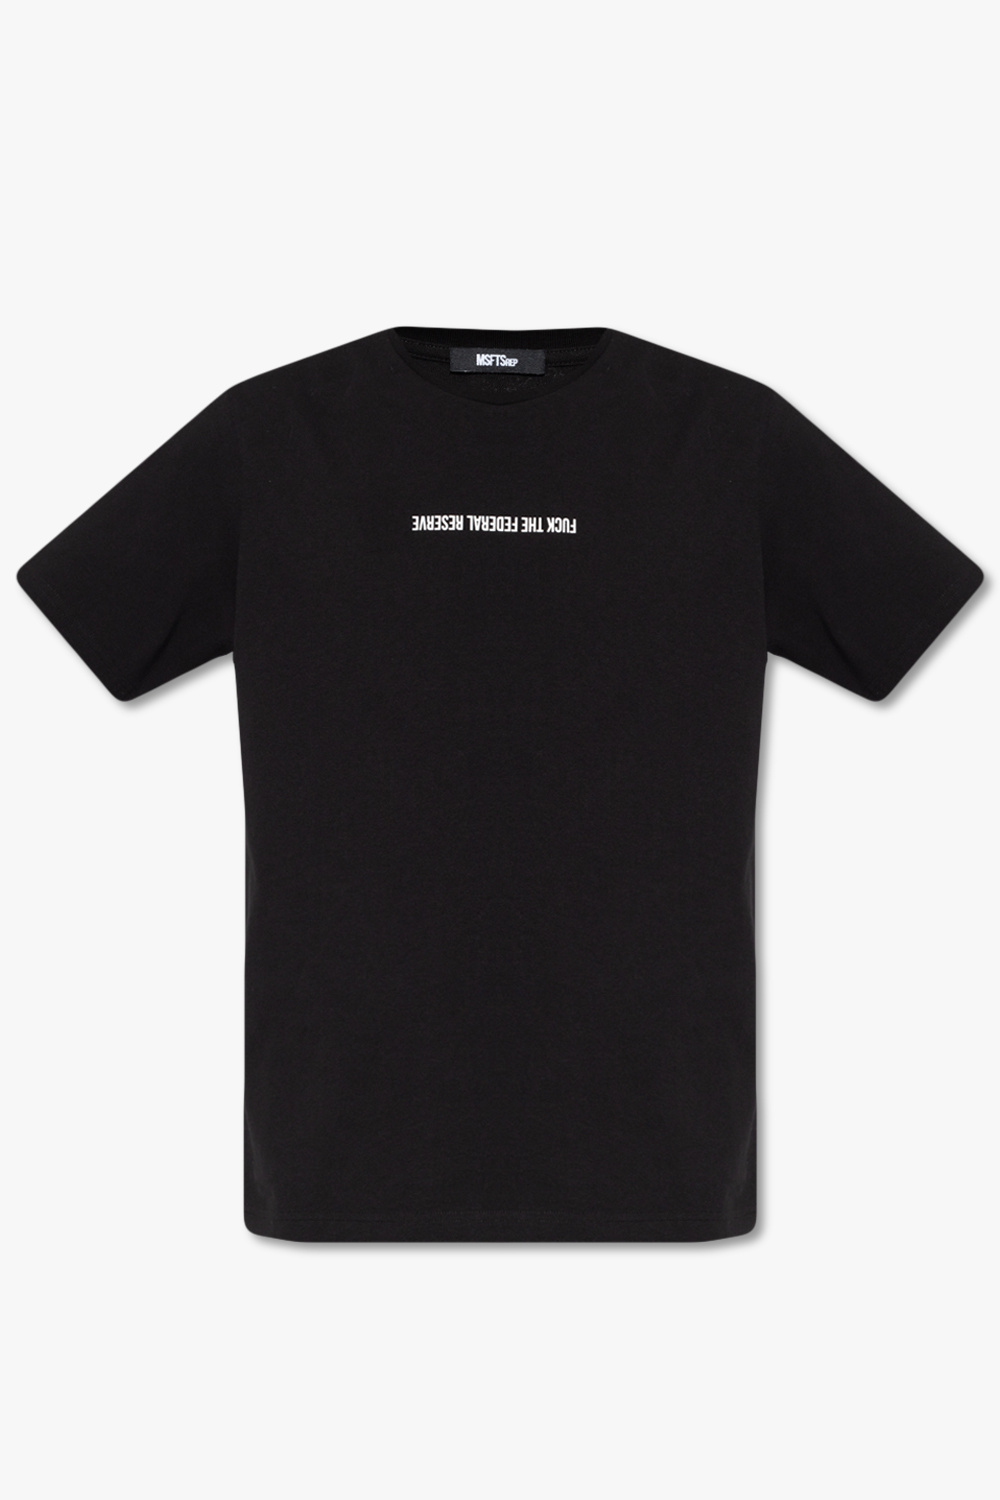 Printed - NC mit Herzausschnitt Alexander shirt MSFTSrep Black StclaircomoShops - Pullover Nude T - McQueen